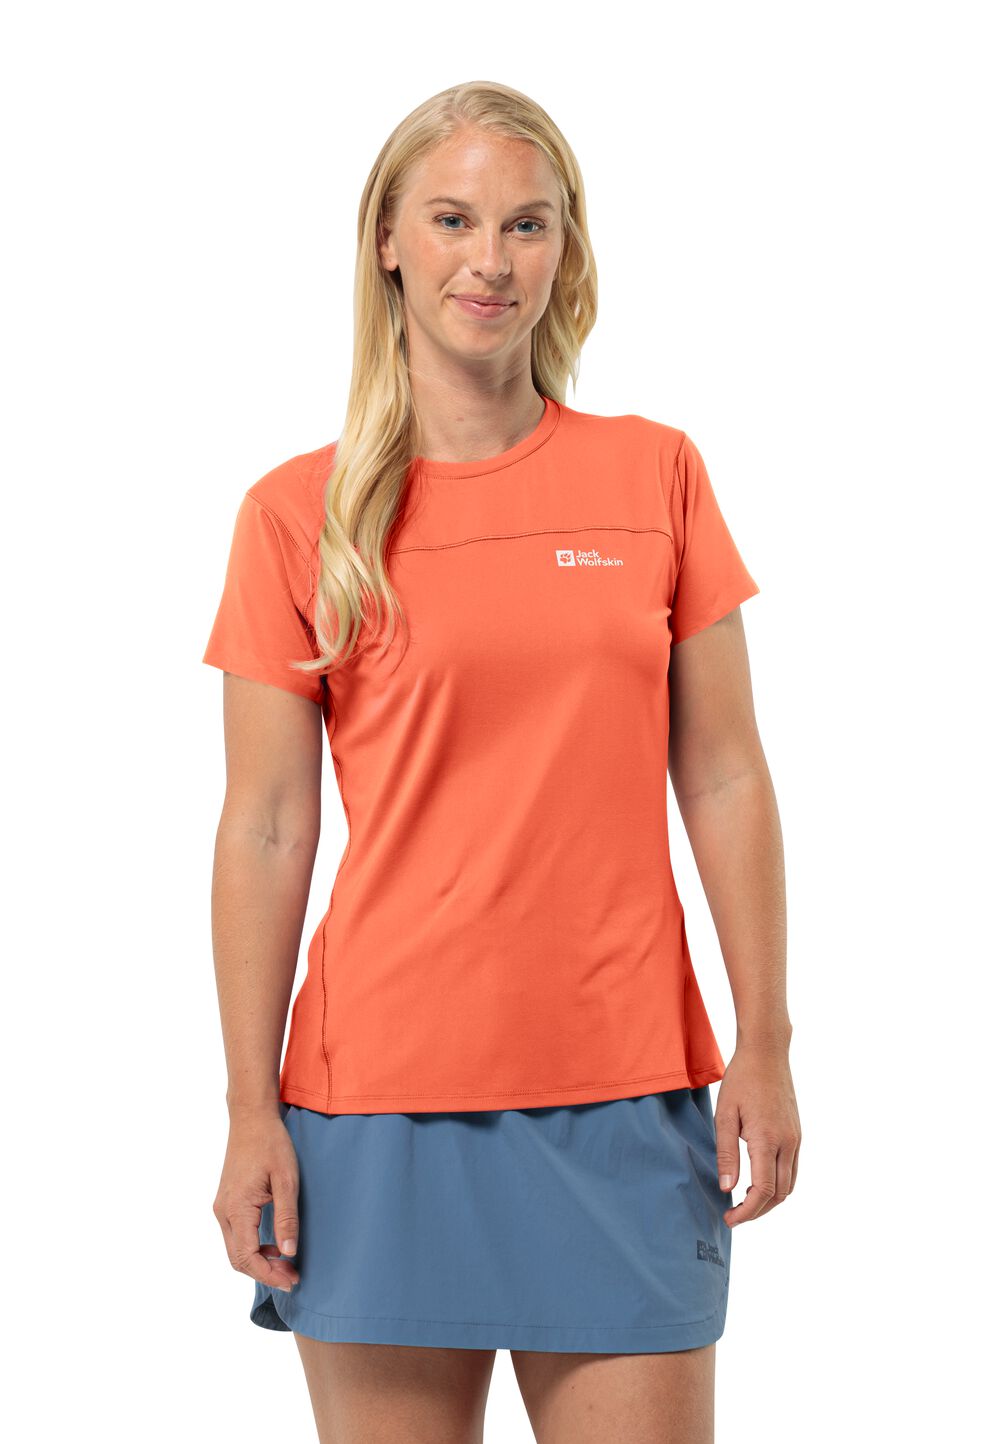 Jack Wolfskin Prelight Chill T-Shirt Women Functioneel shirt Dames XS rood digital orange